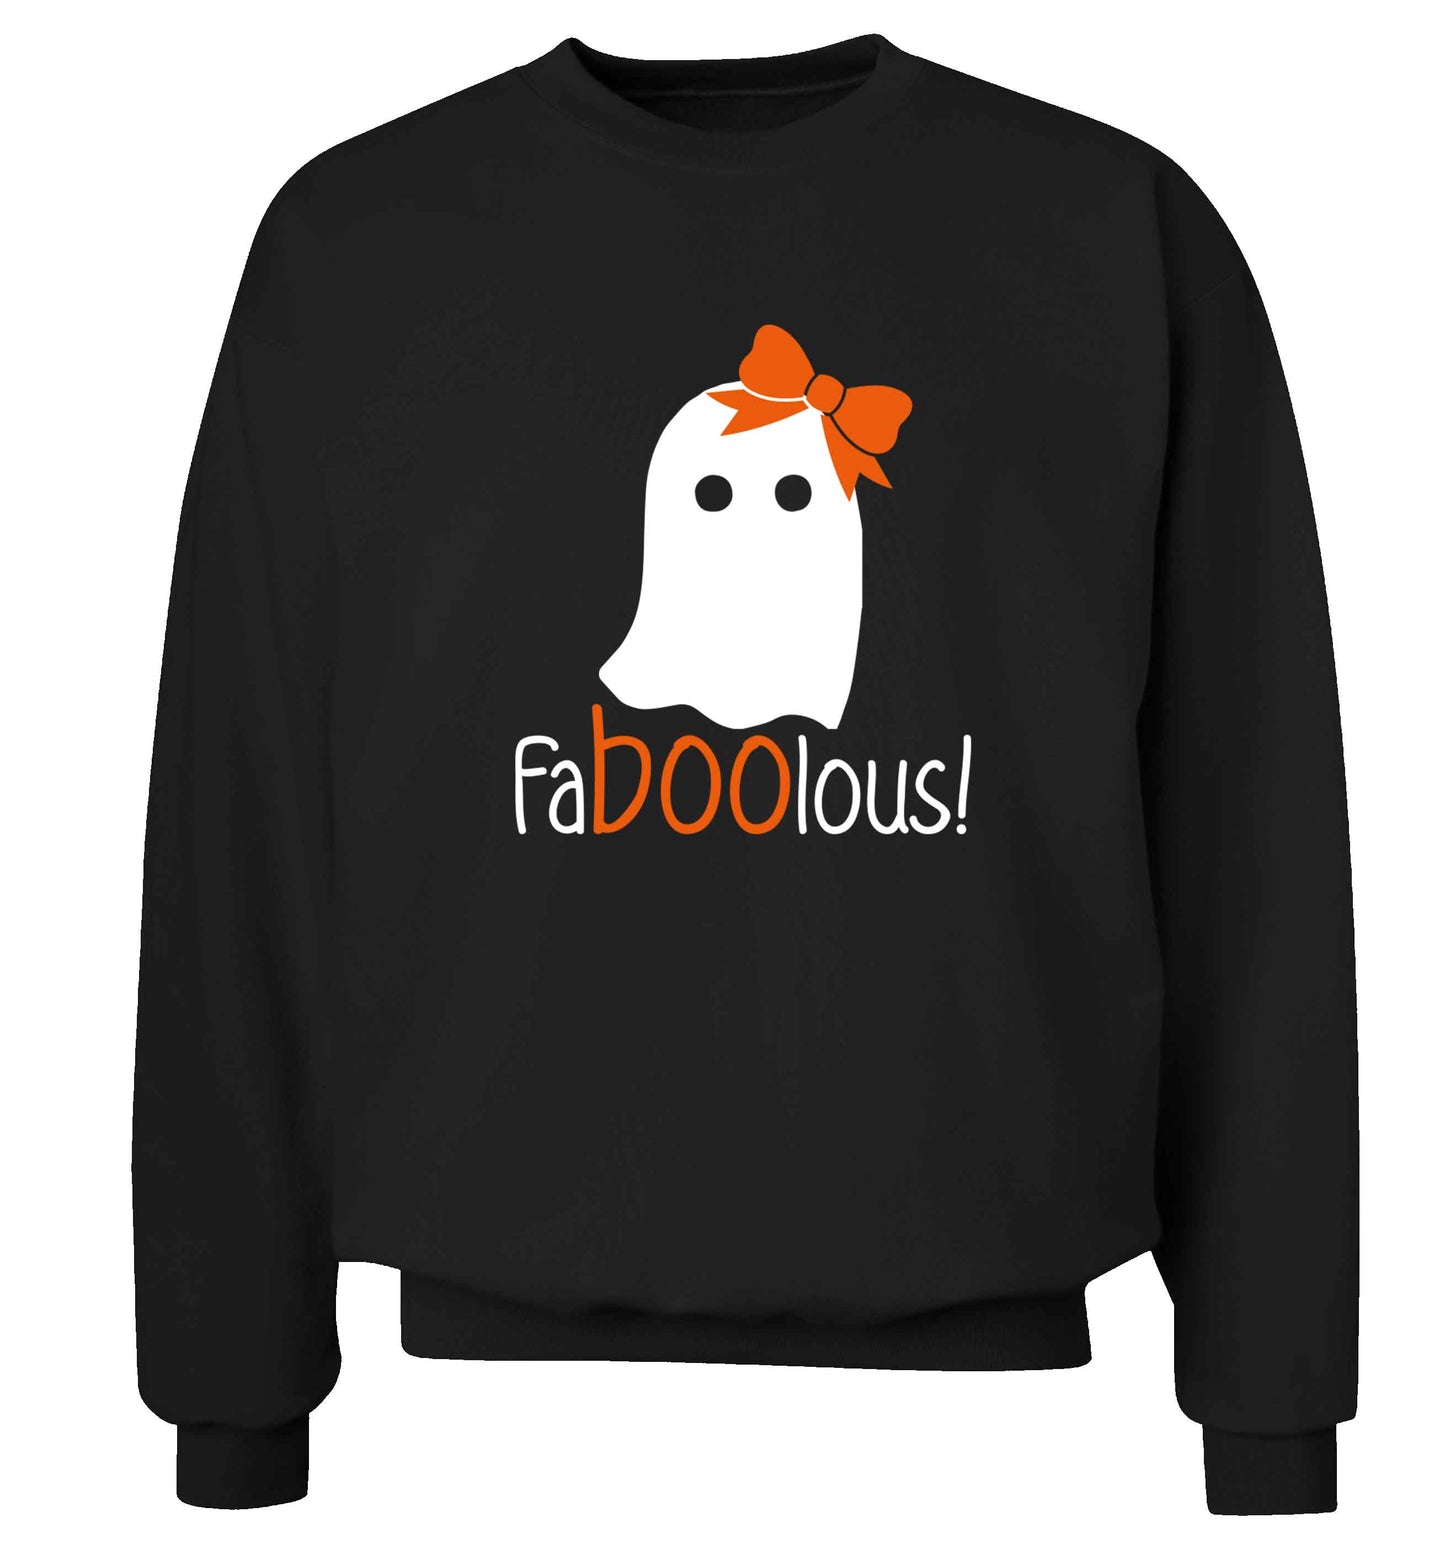 Faboolous ghost adult's unisex black sweater 2XL